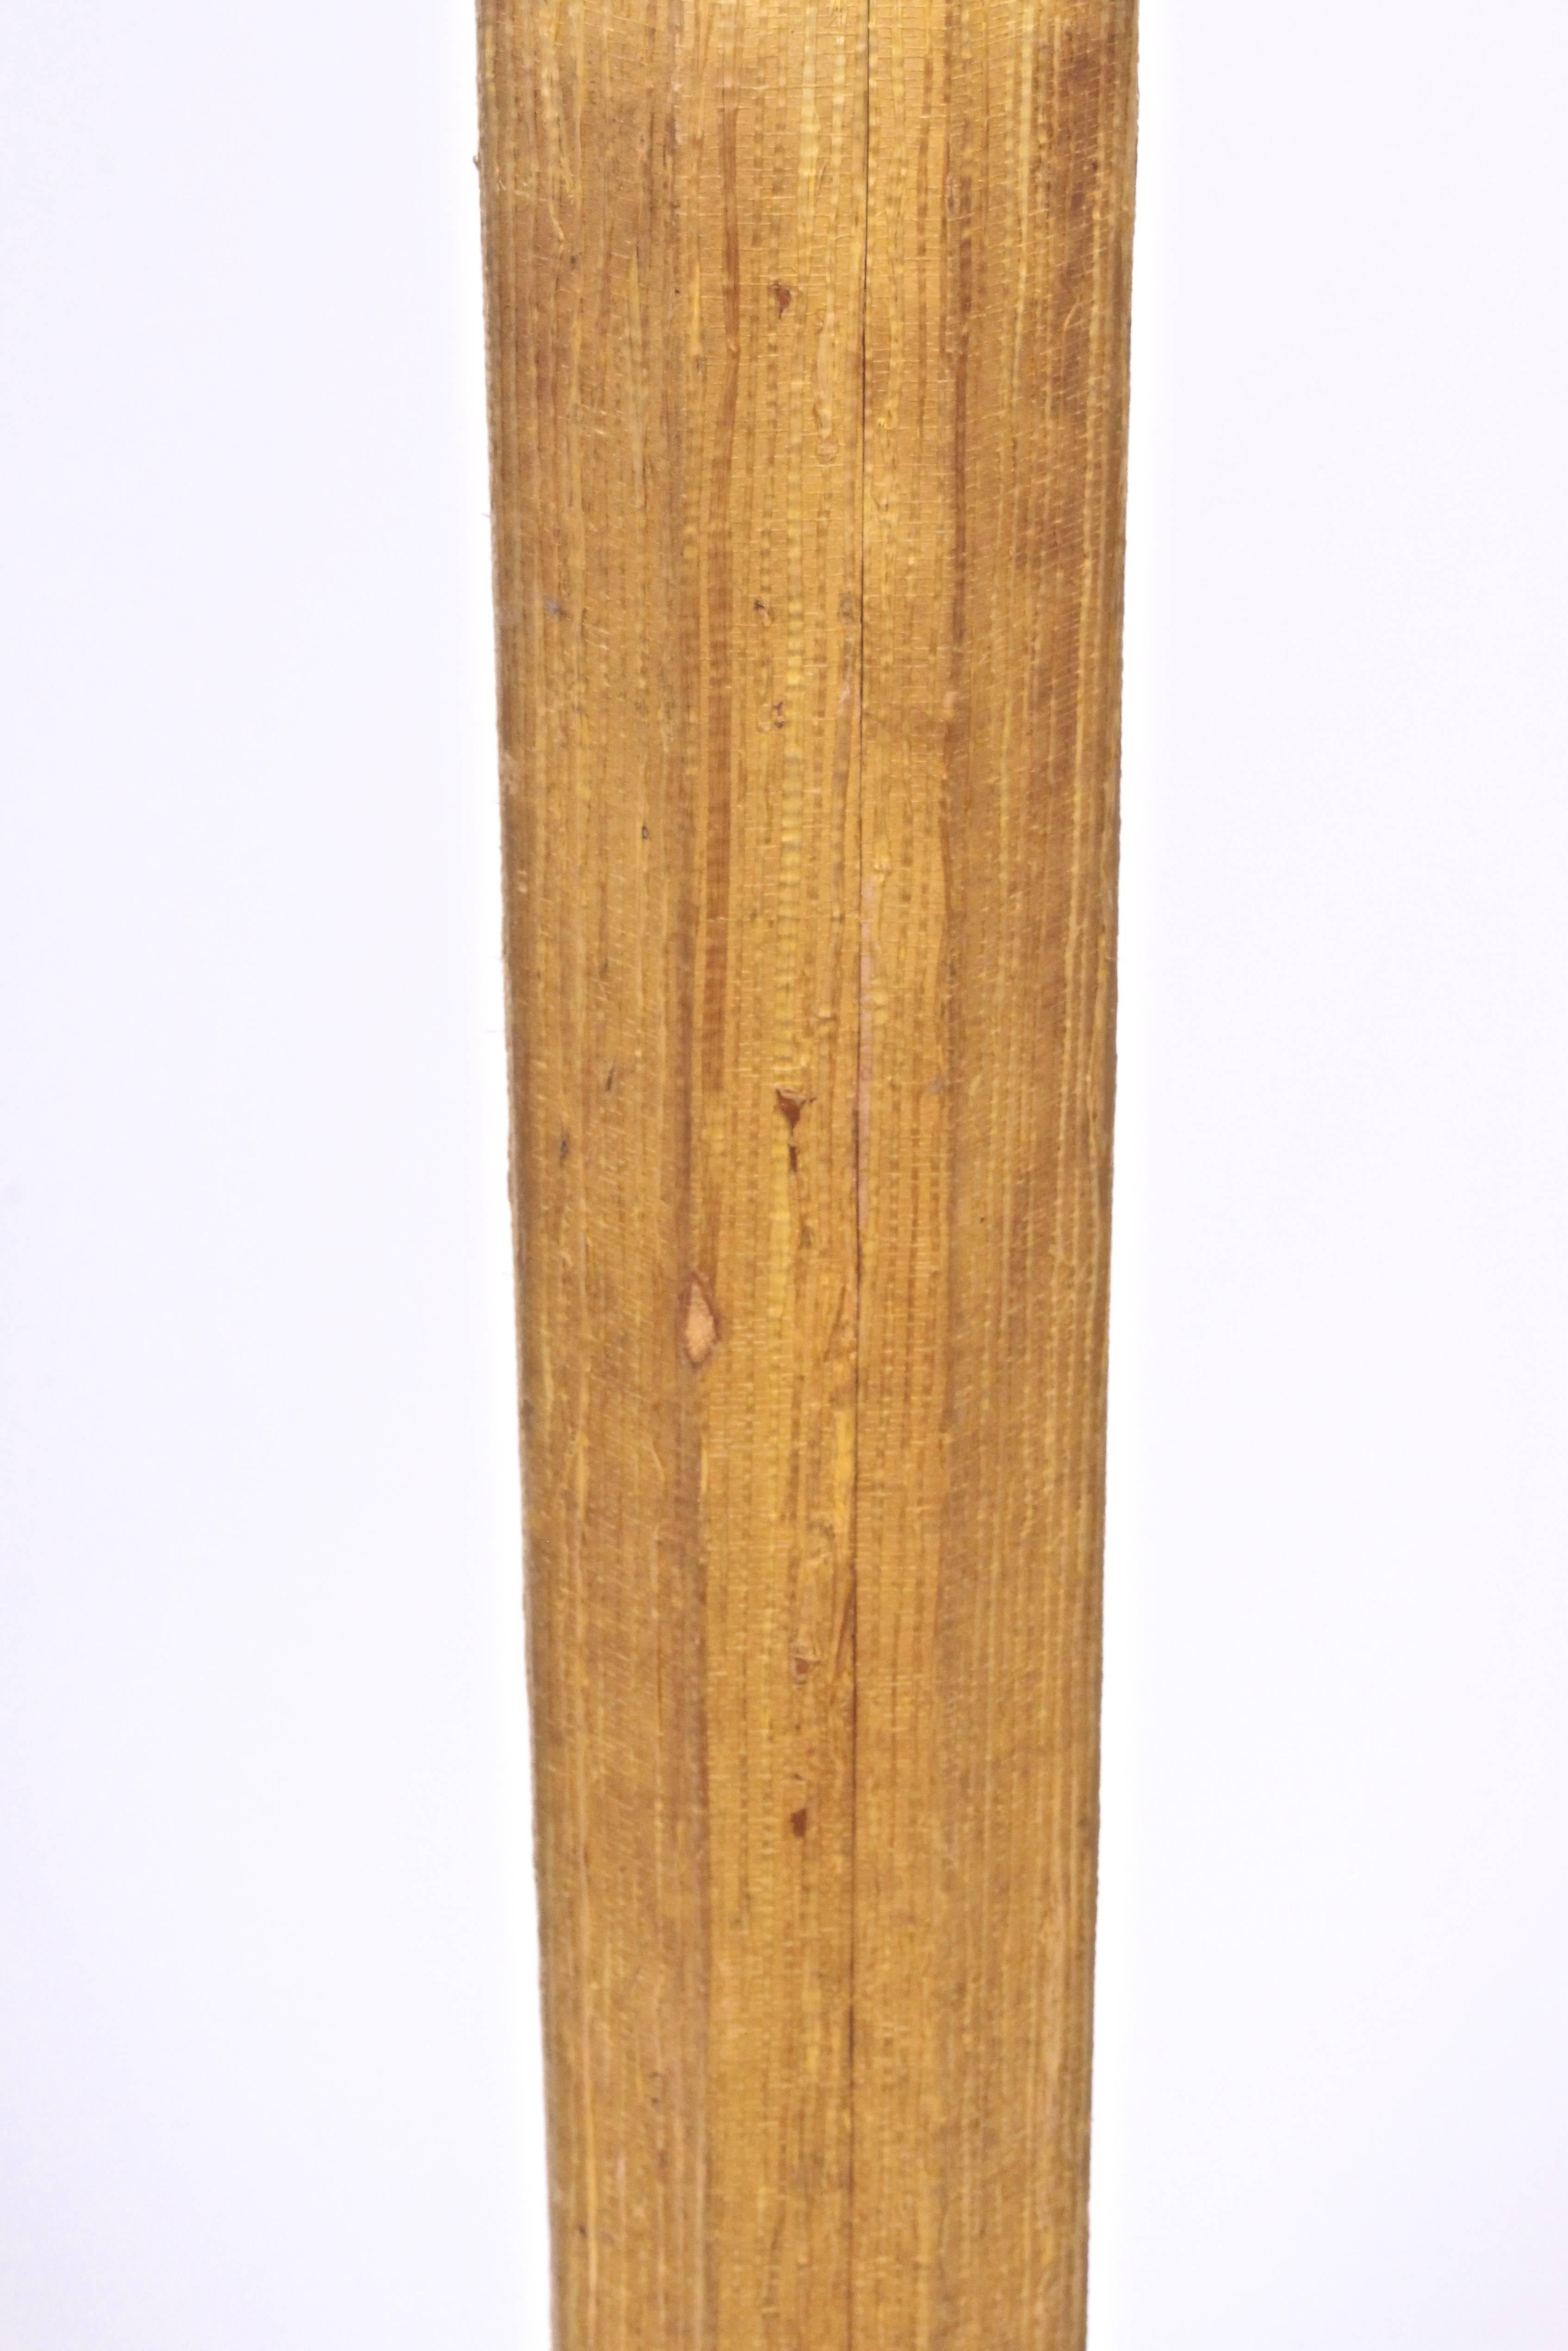 American Tall Karl Springer Style Grasscloth, Lucite & Black Enamel Table Lamp, 1970s For Sale